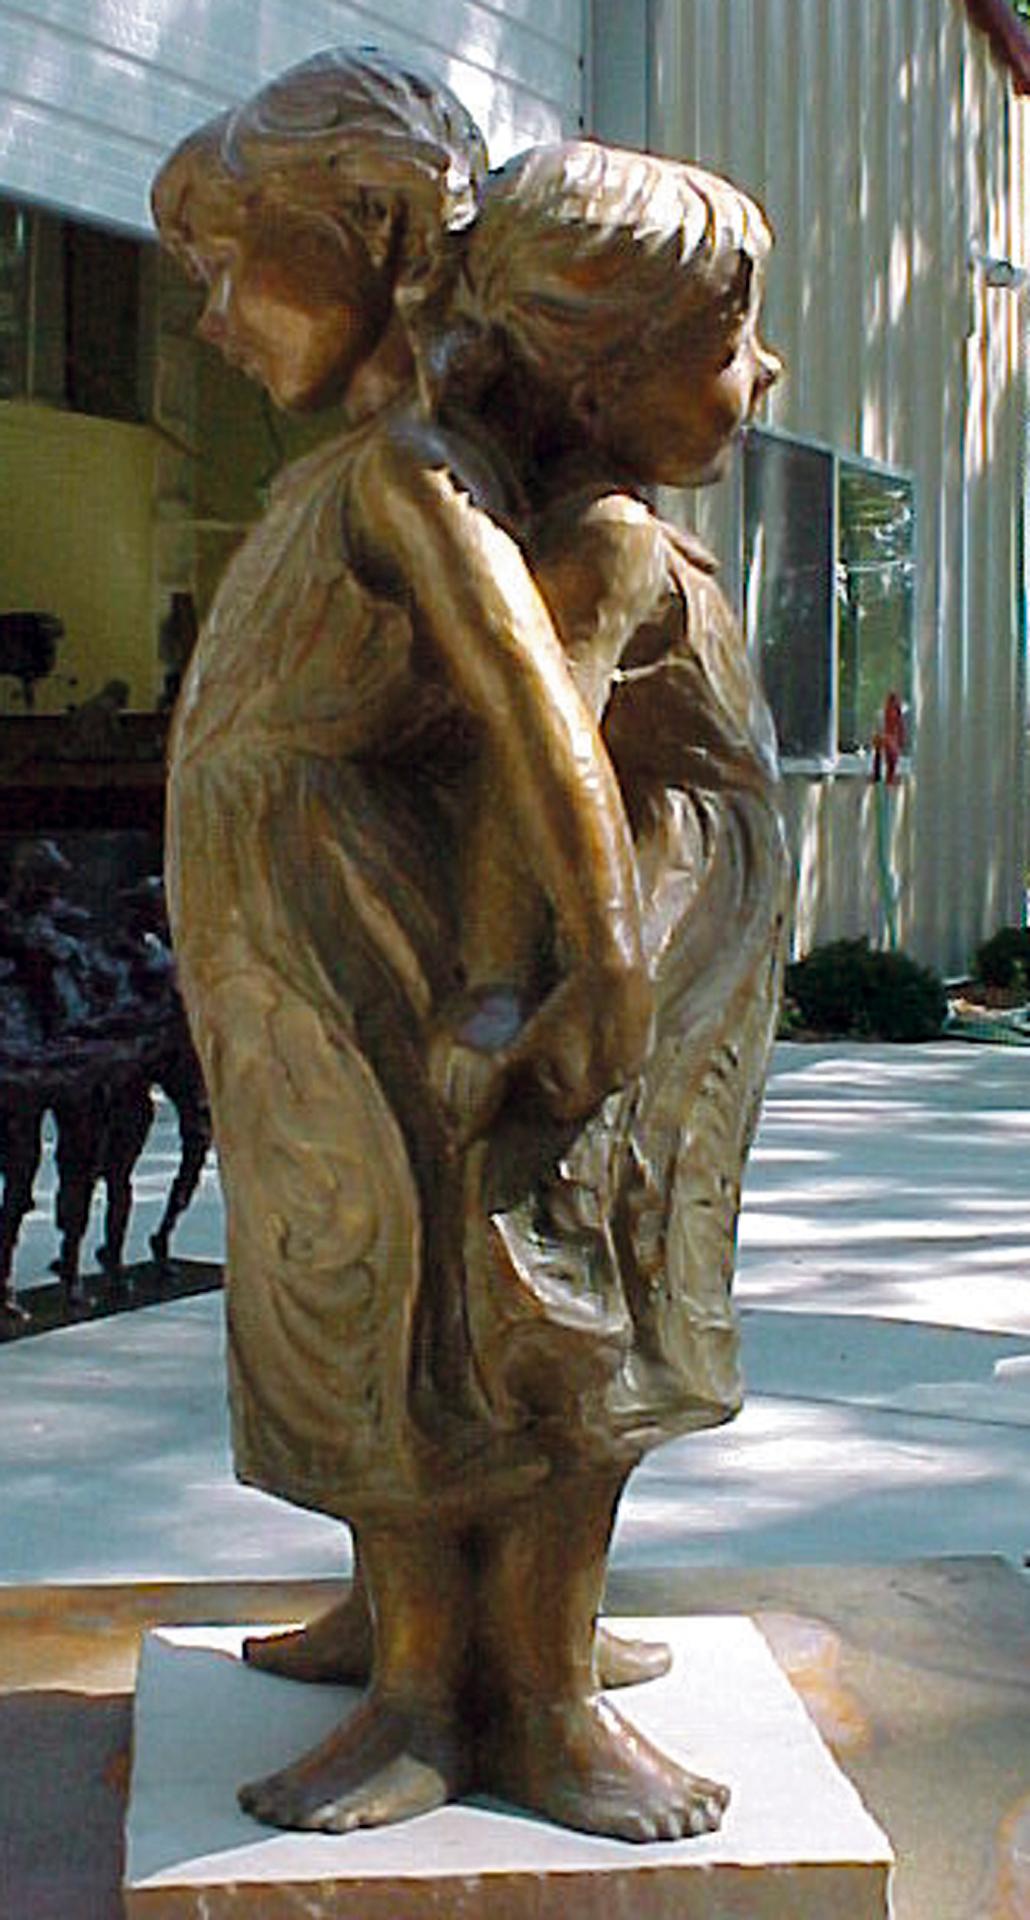 Standing Together by Jane DeDecker
Figurative Bronze. 42x24x24